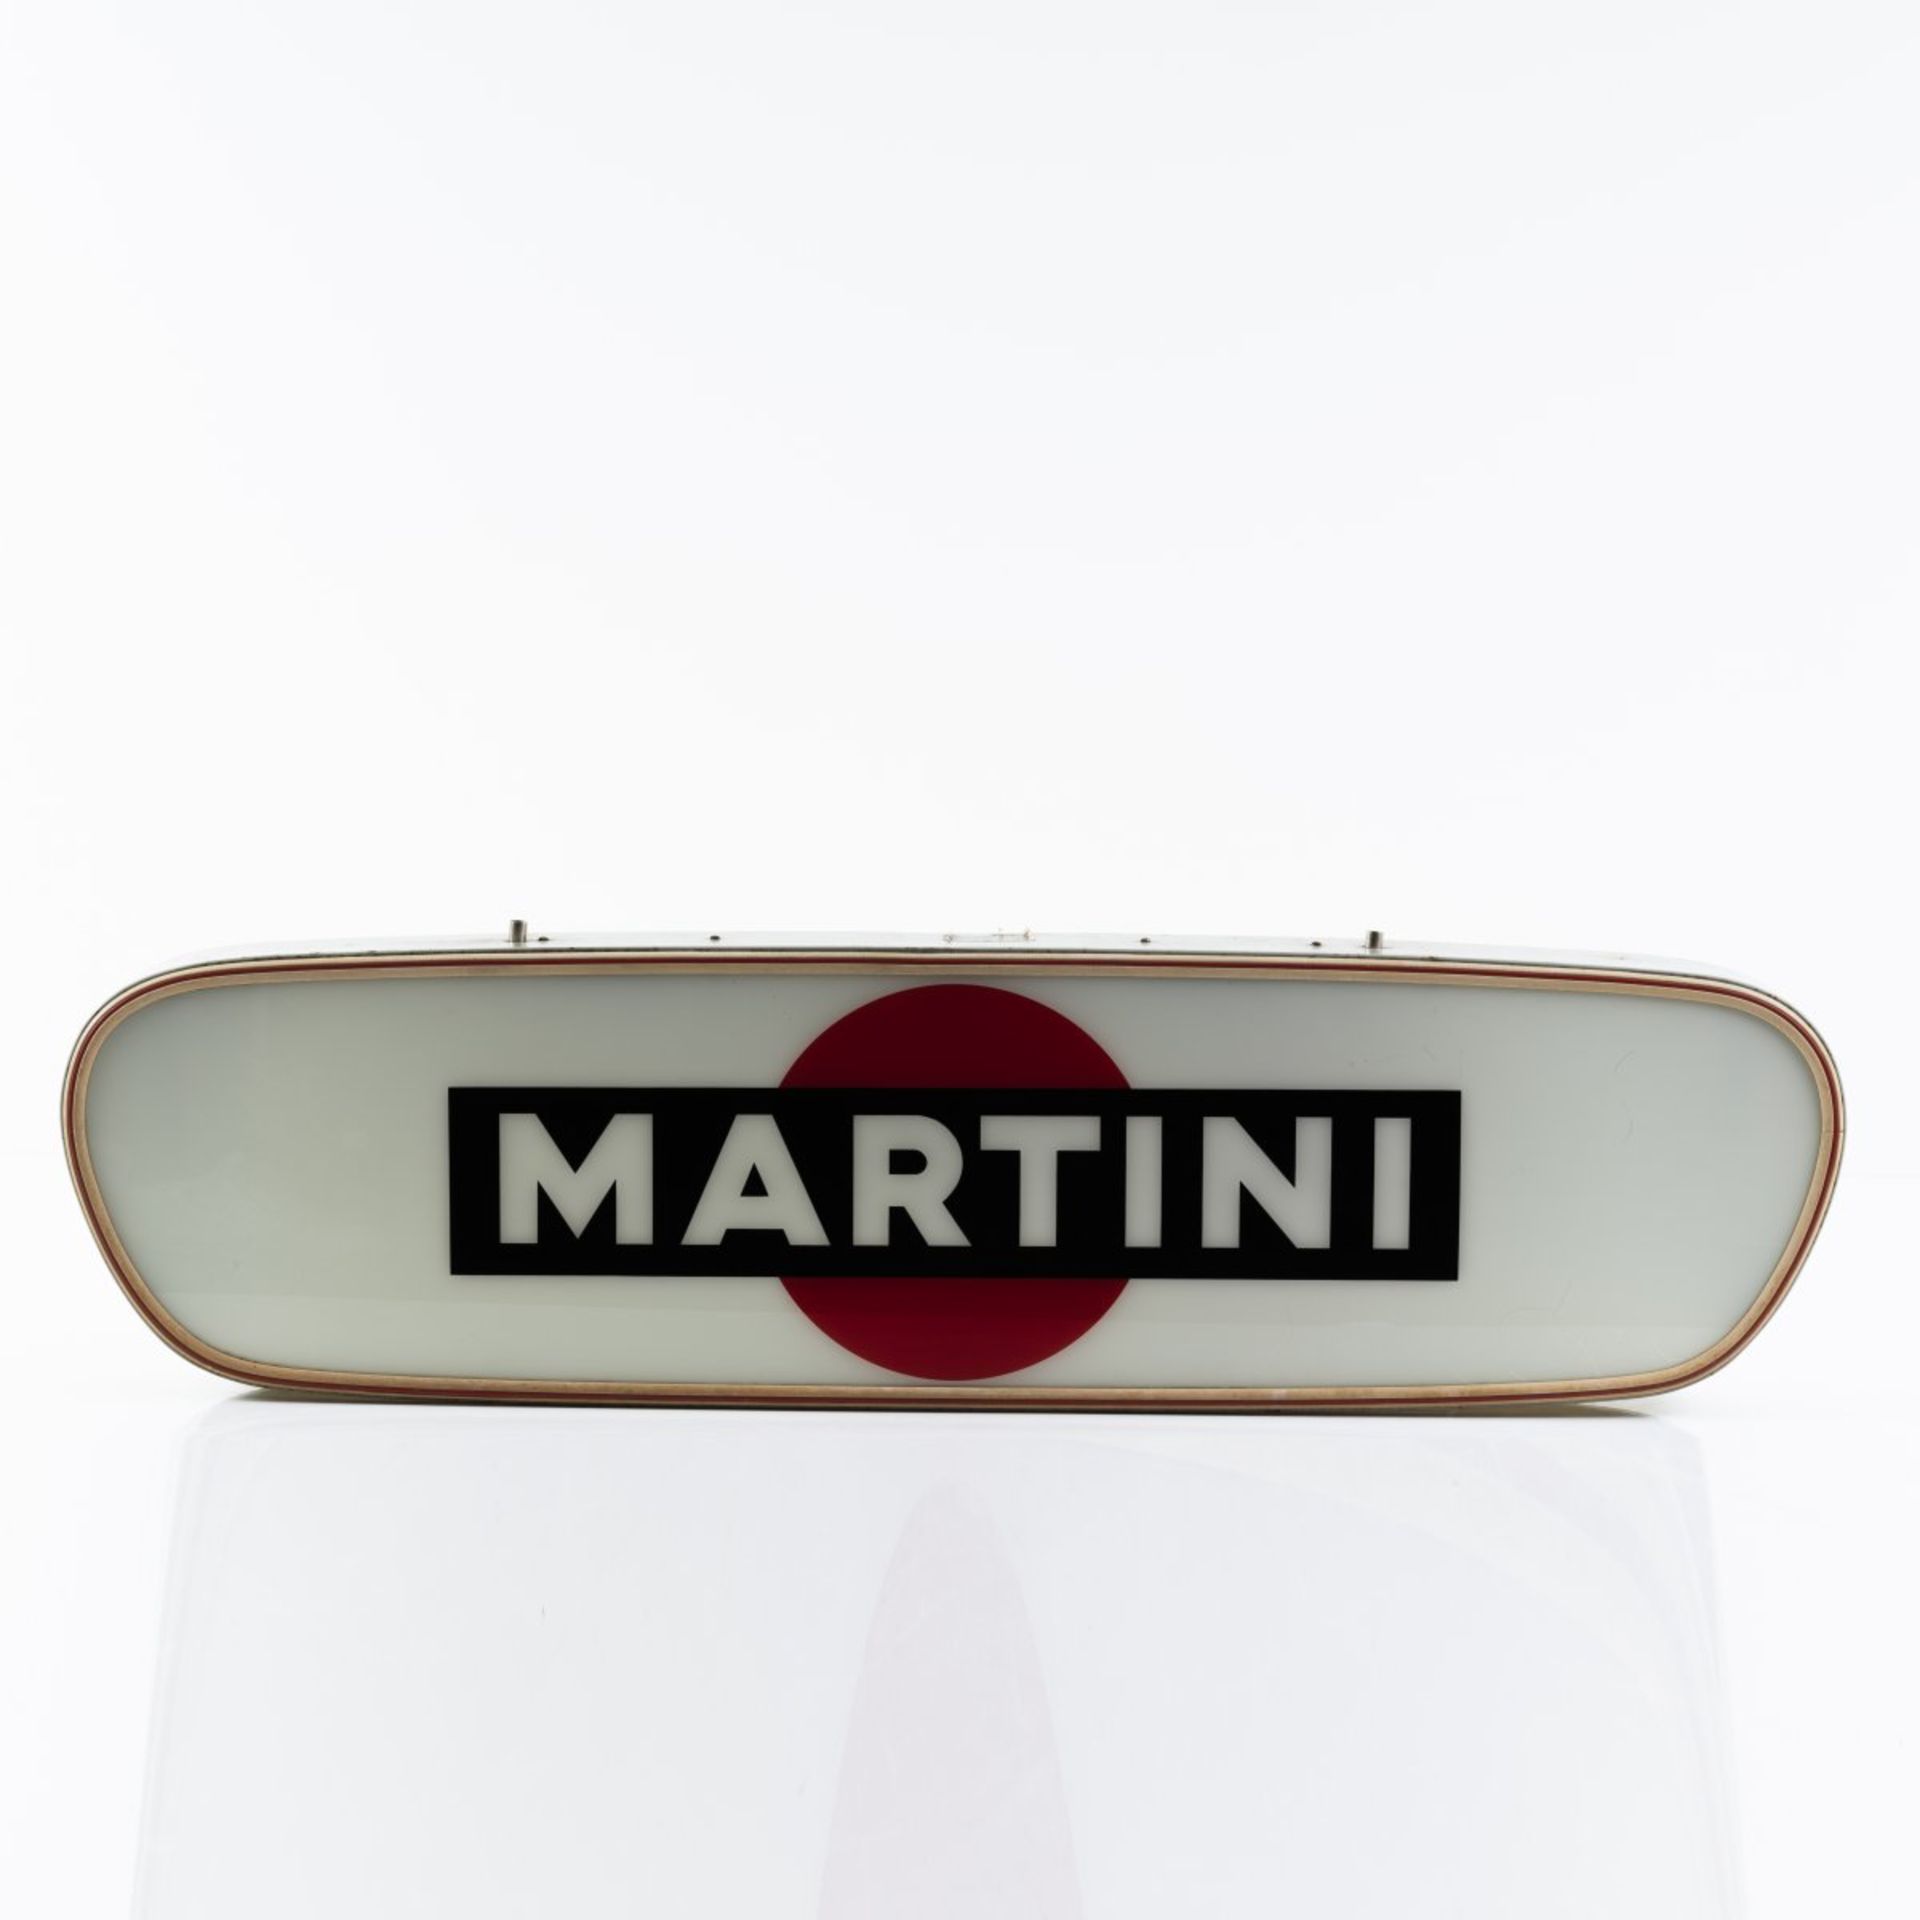 Martini & Rossi , Leuchtwerbung 'Martini', 1950er Jahre - Bild 3 aus 7